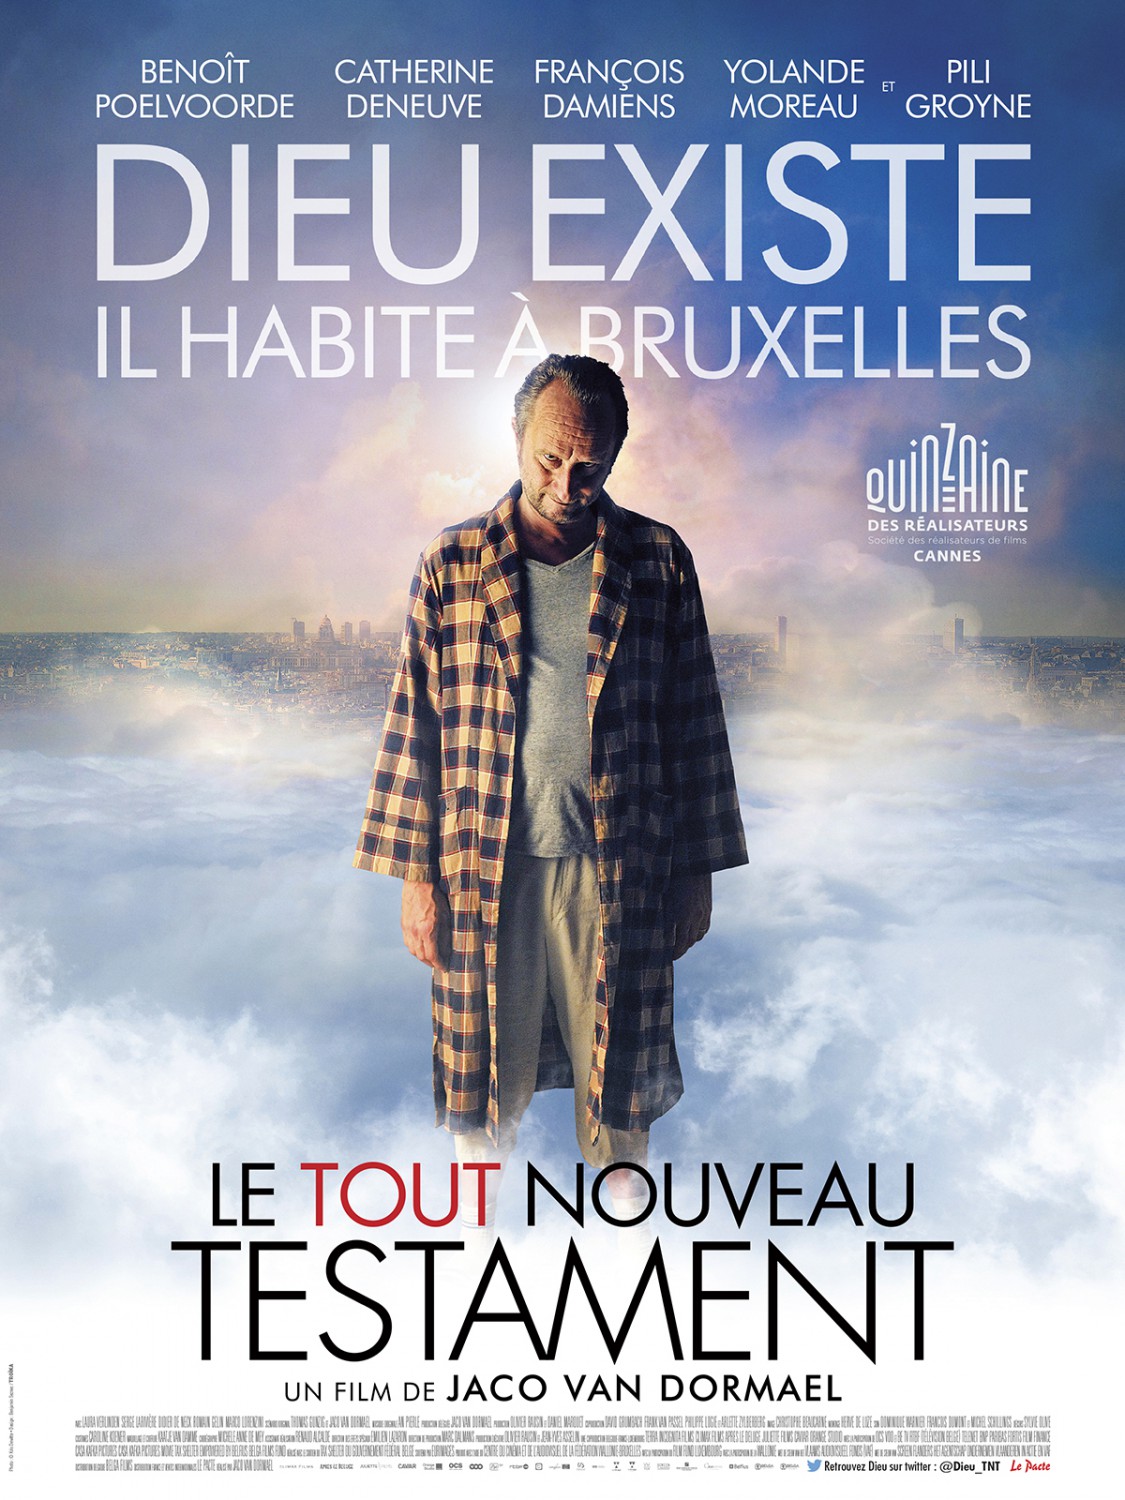 Extra Large Movie Poster Image for Le tout nouveau testament (#1 of 3)